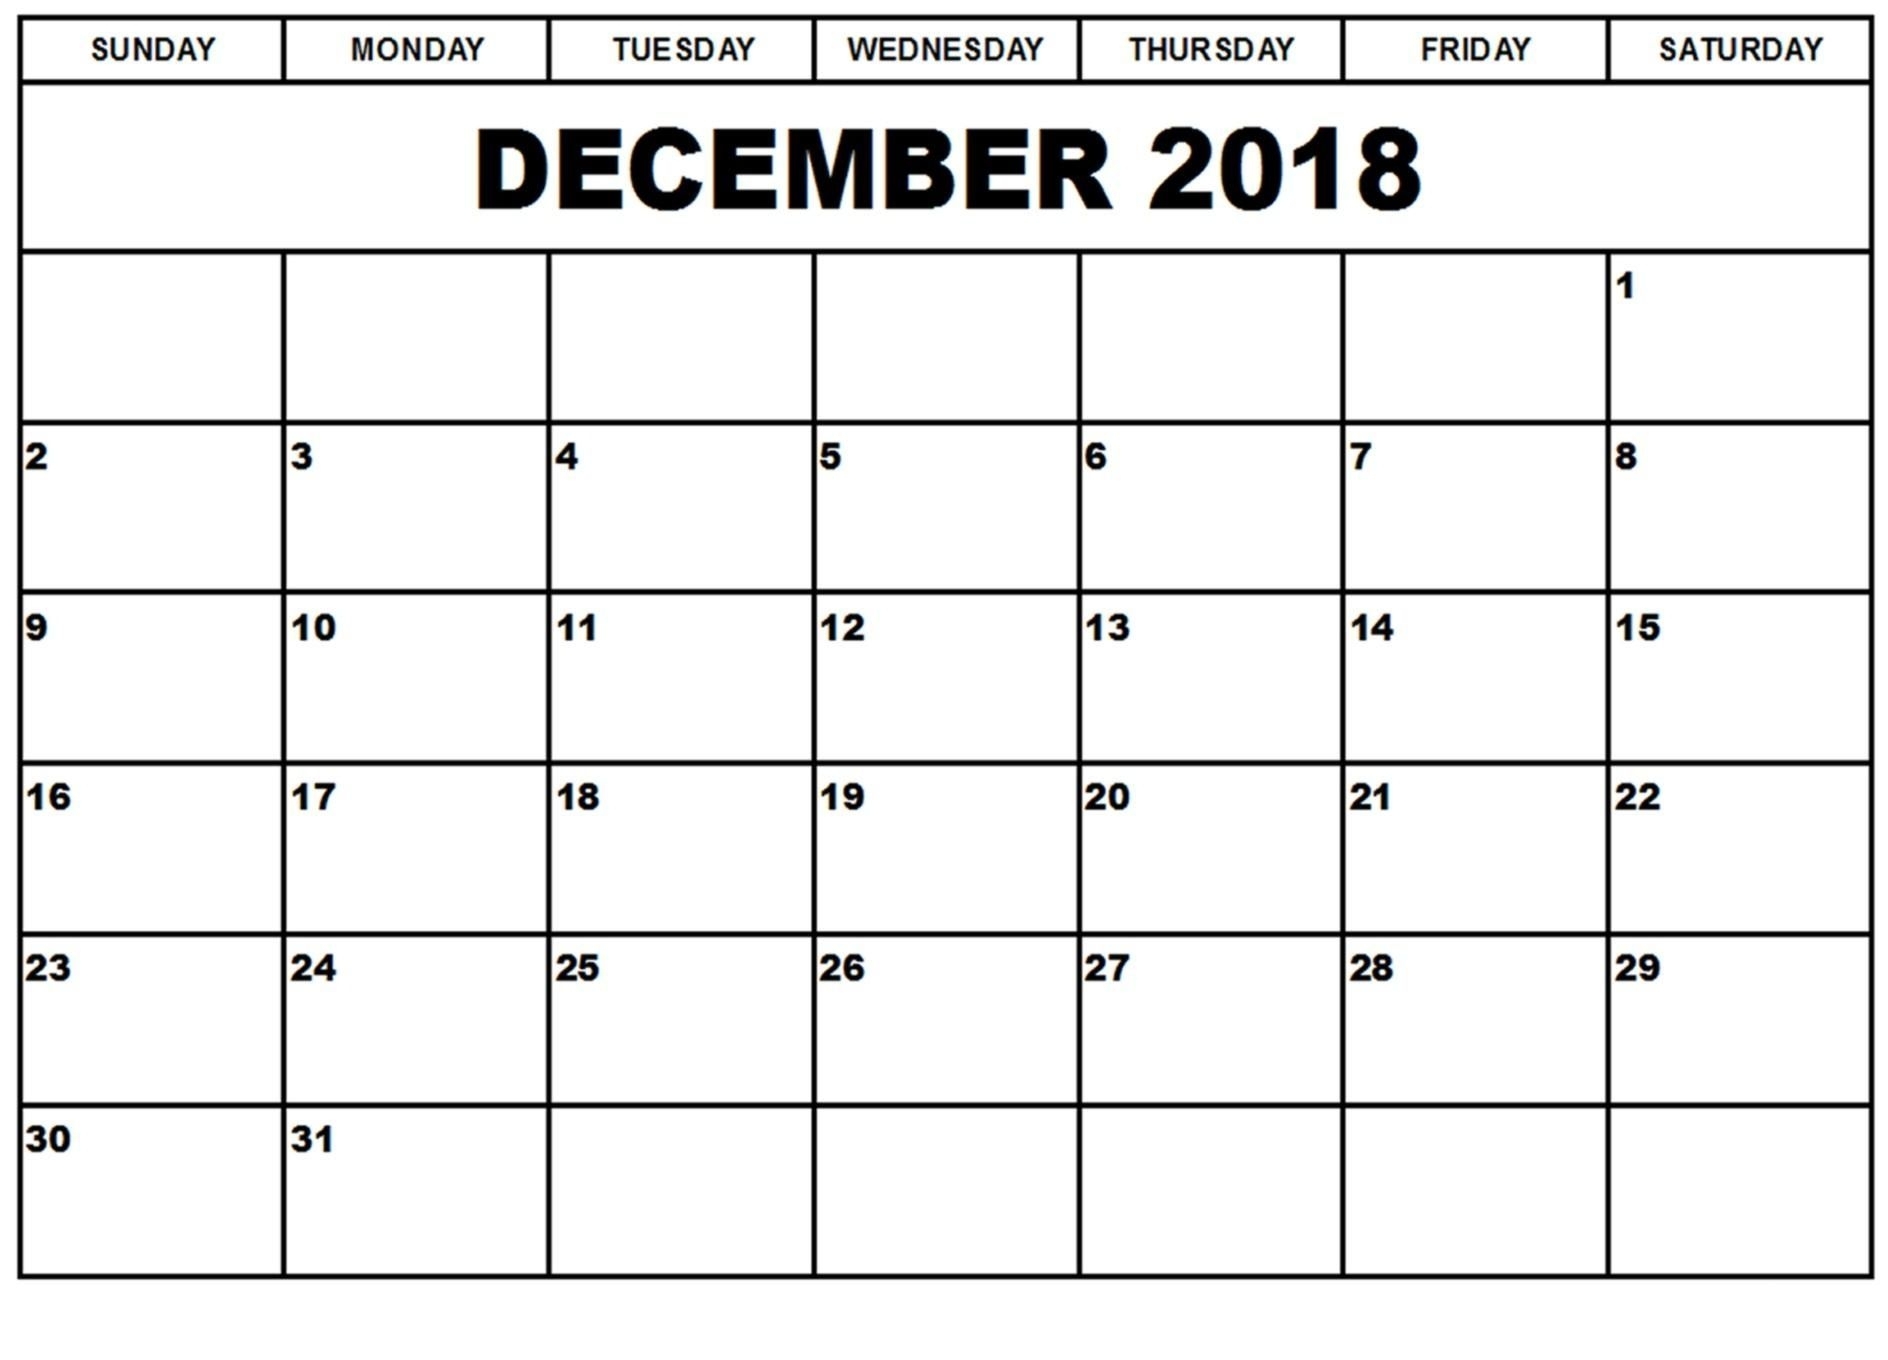 Dec 2018 Calendar Table Planner | June 2019 Calendar